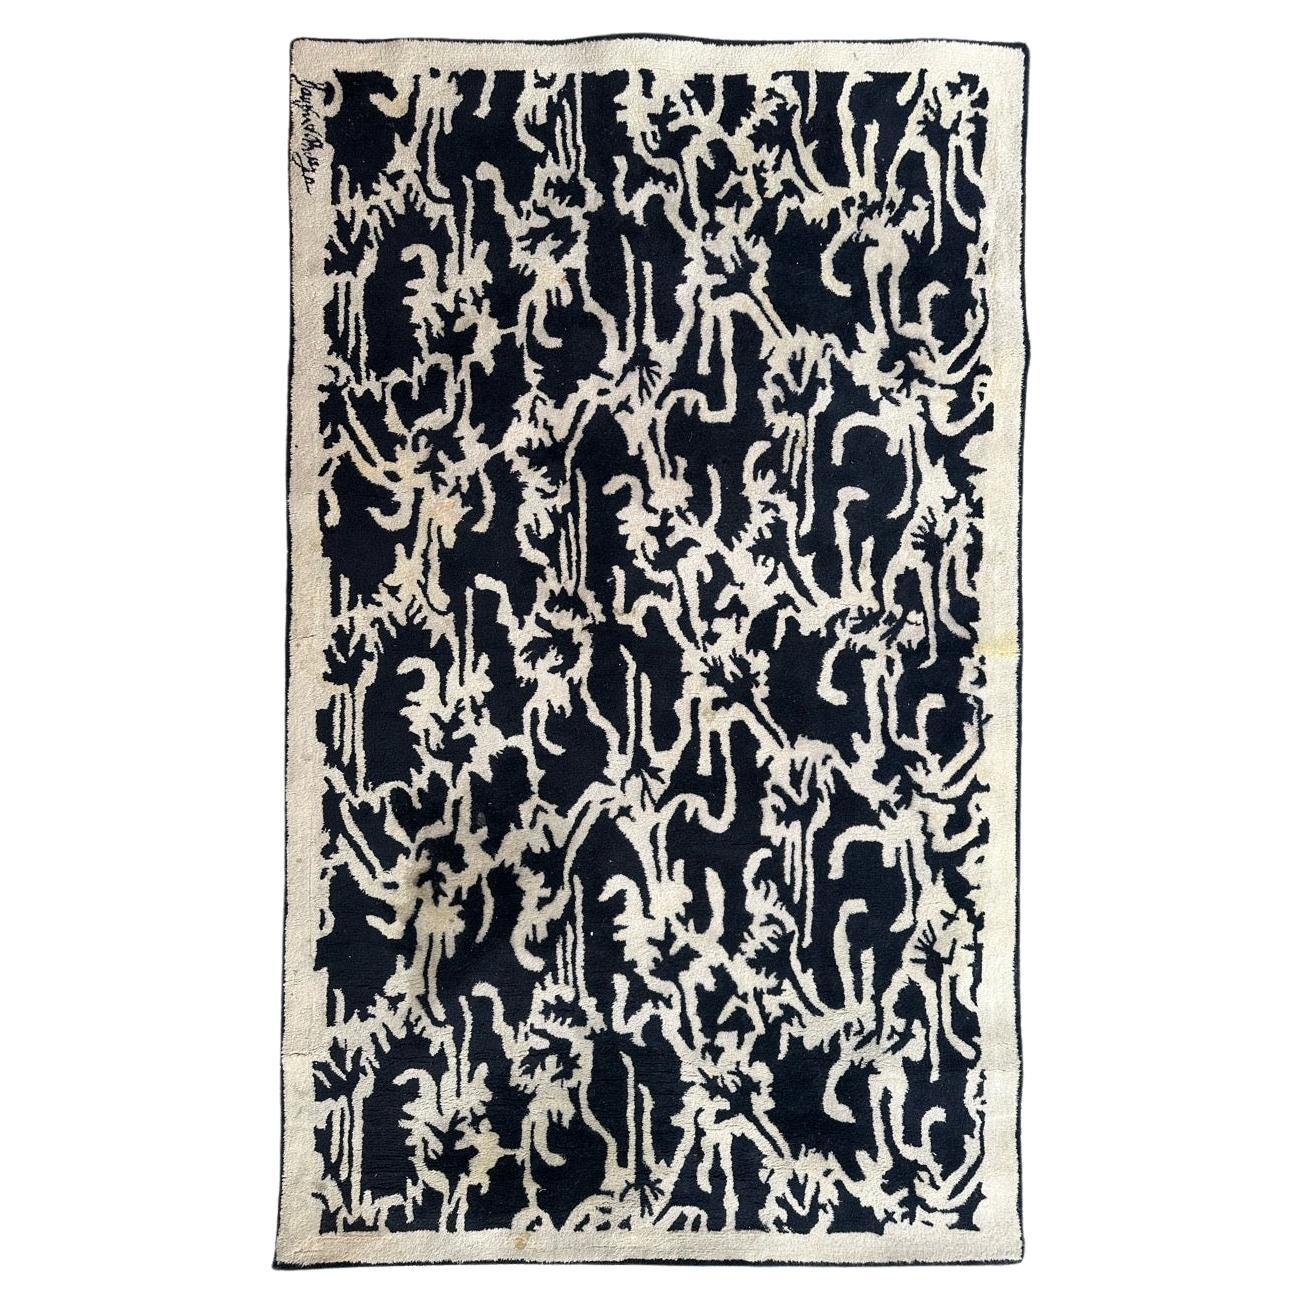 Bobyrug’s Pretty vintage modern rug with signature 